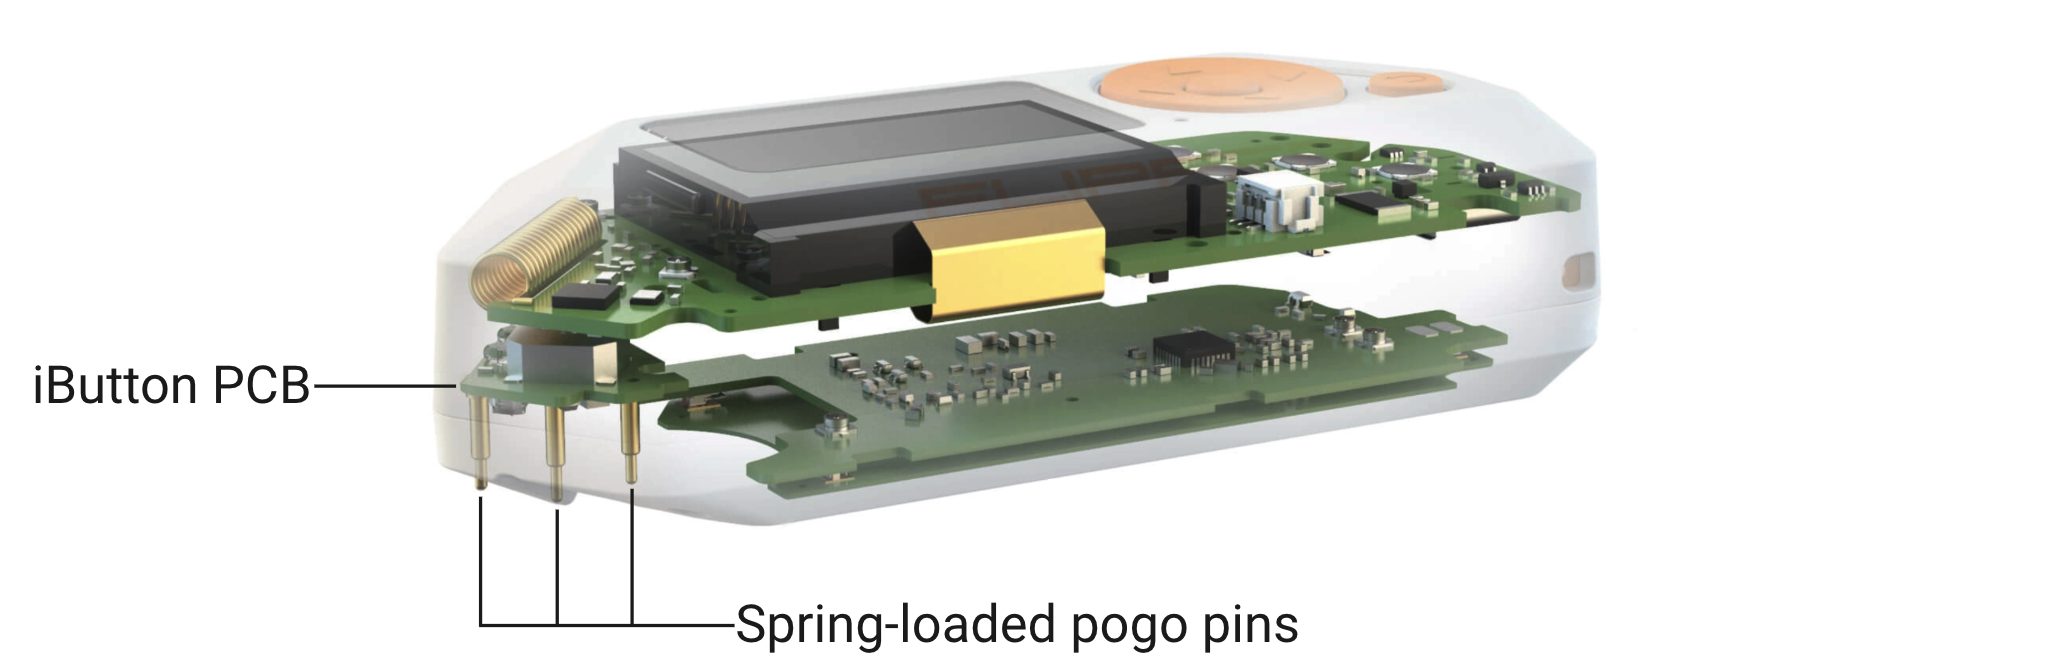 iButton module's pins